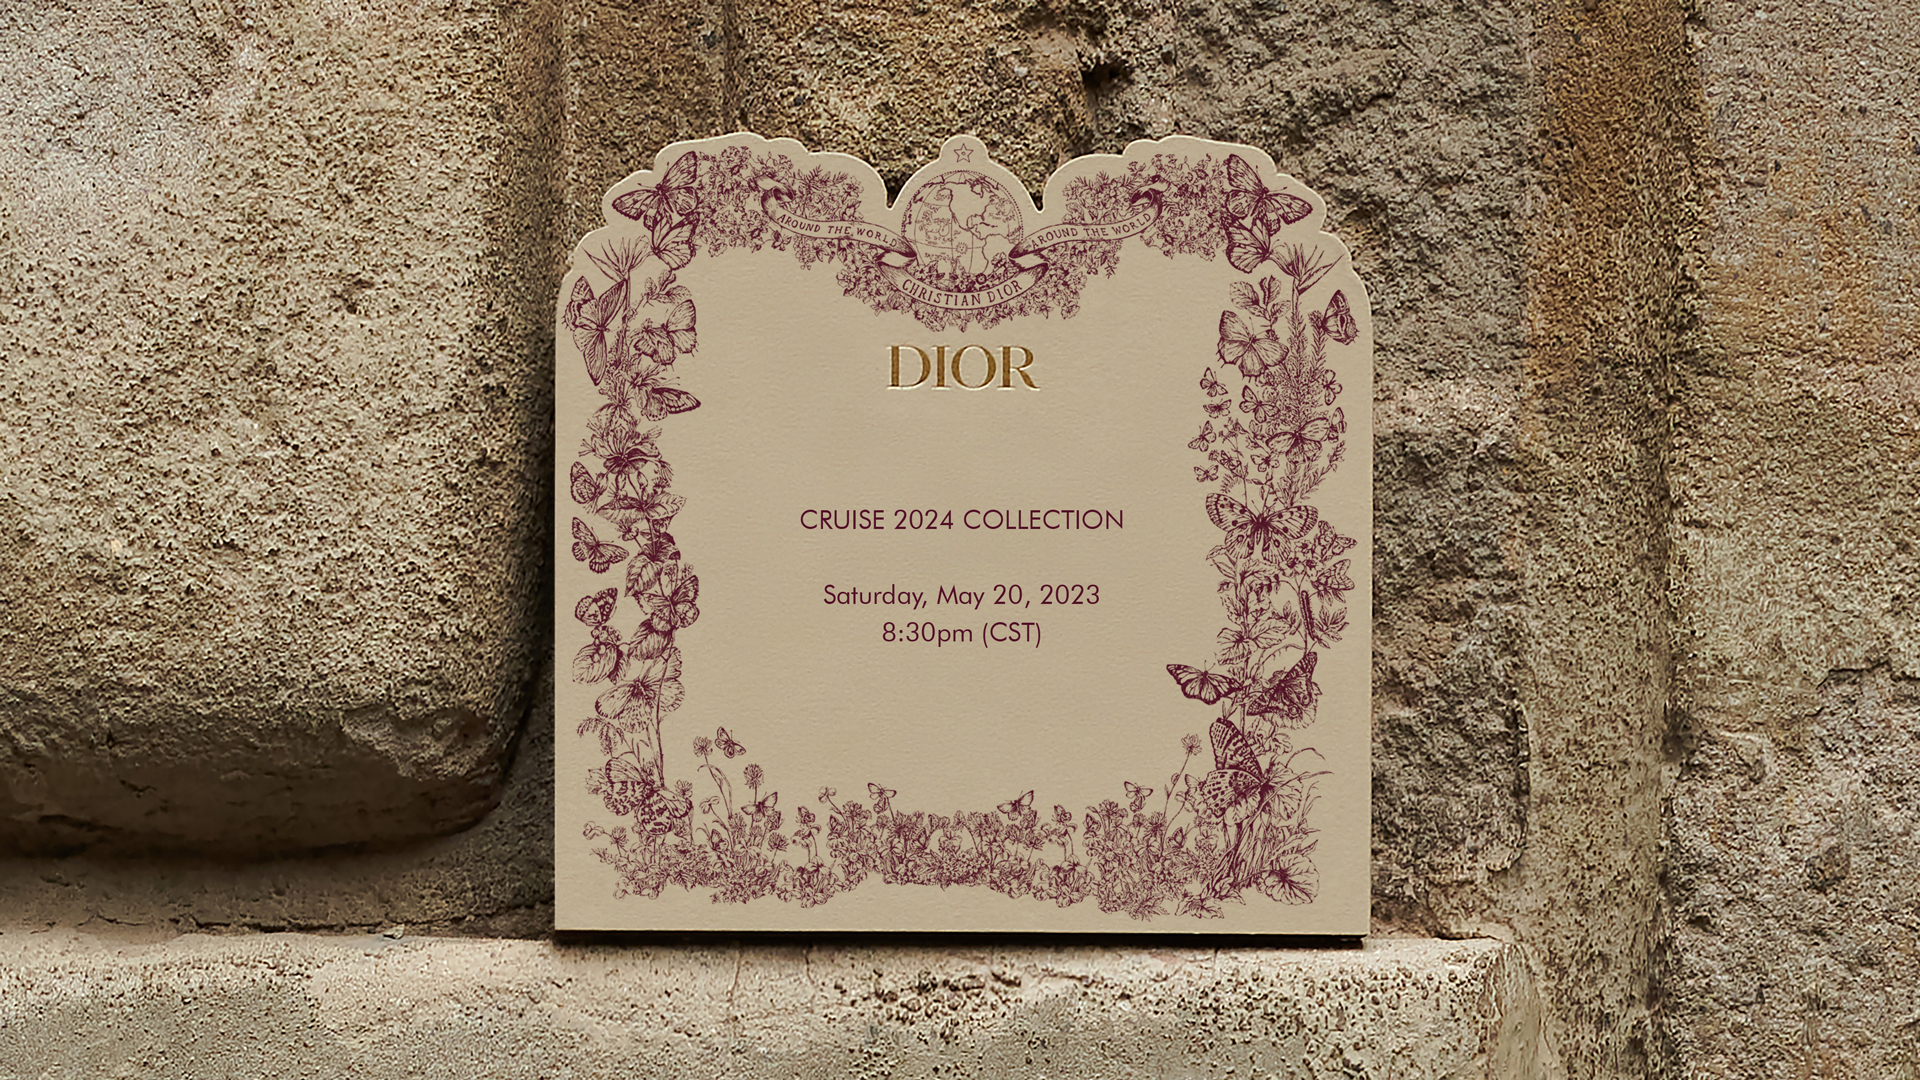 Christian Dior Fashion Week Invitation  Fashion invitation, Fashion show  invitation, Fashion event invitation